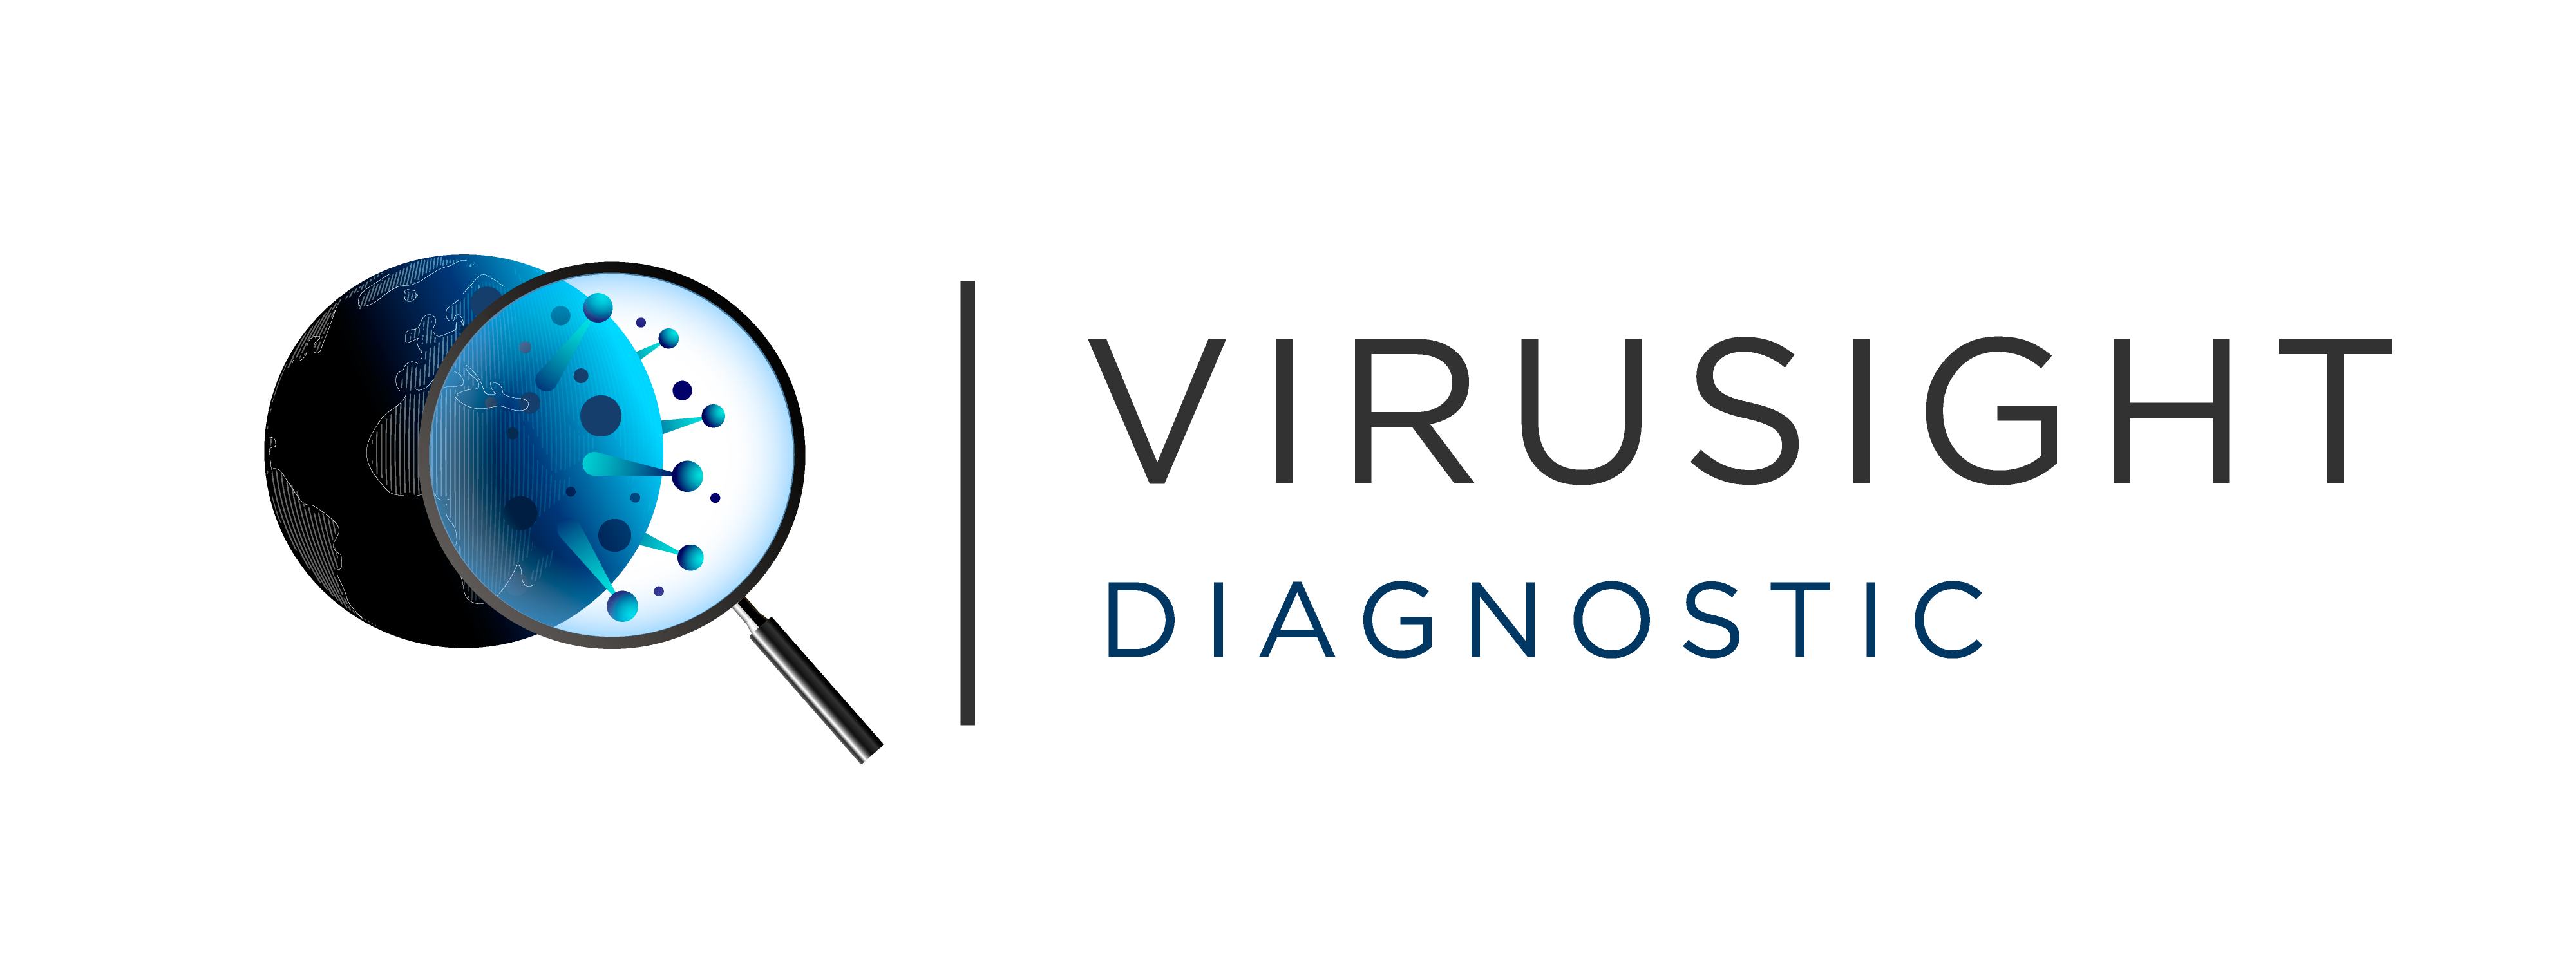 Virusight Diagnostic